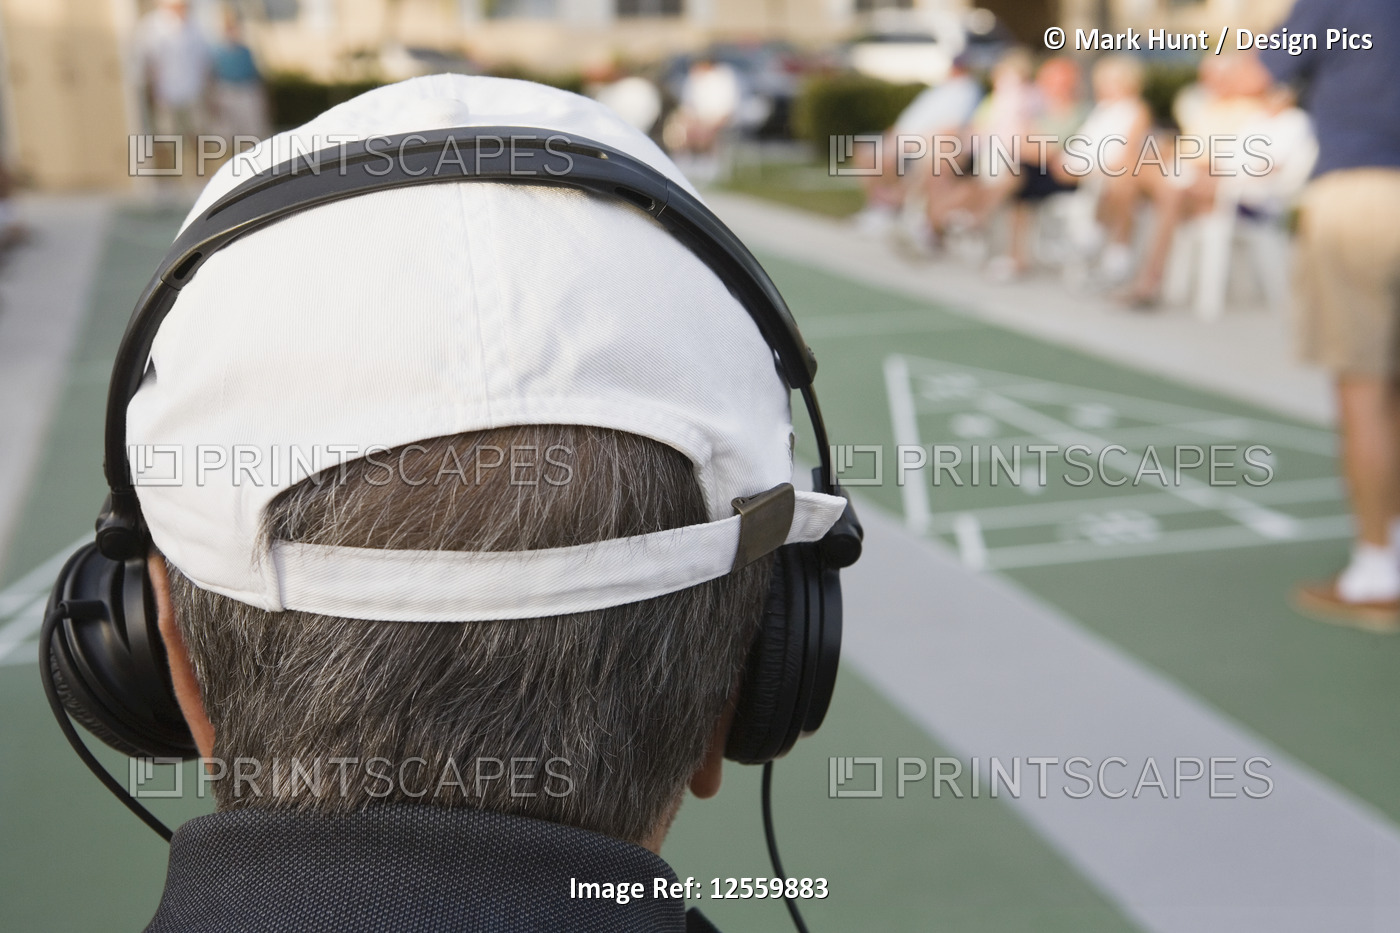 Rear view of a senior man wearing headphones